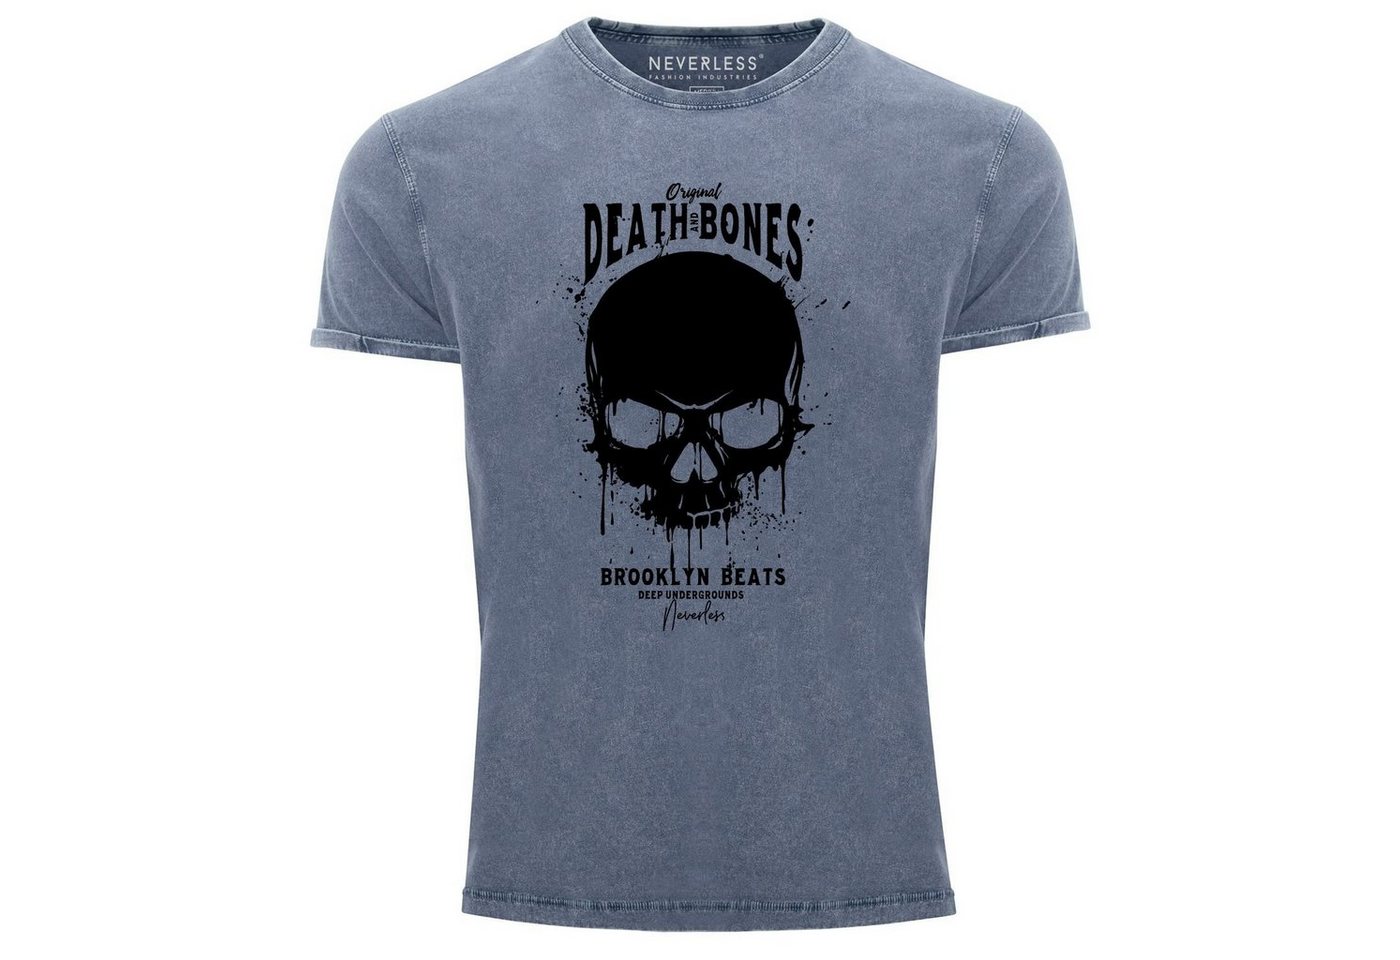 Neverless Print-Shirt Neverless® Herren T-Shirt Vintage Shirt Printshirt Skull Death and Bones Totenkopf Club Outfit Used Look Slim Fit mit Print von Neverless